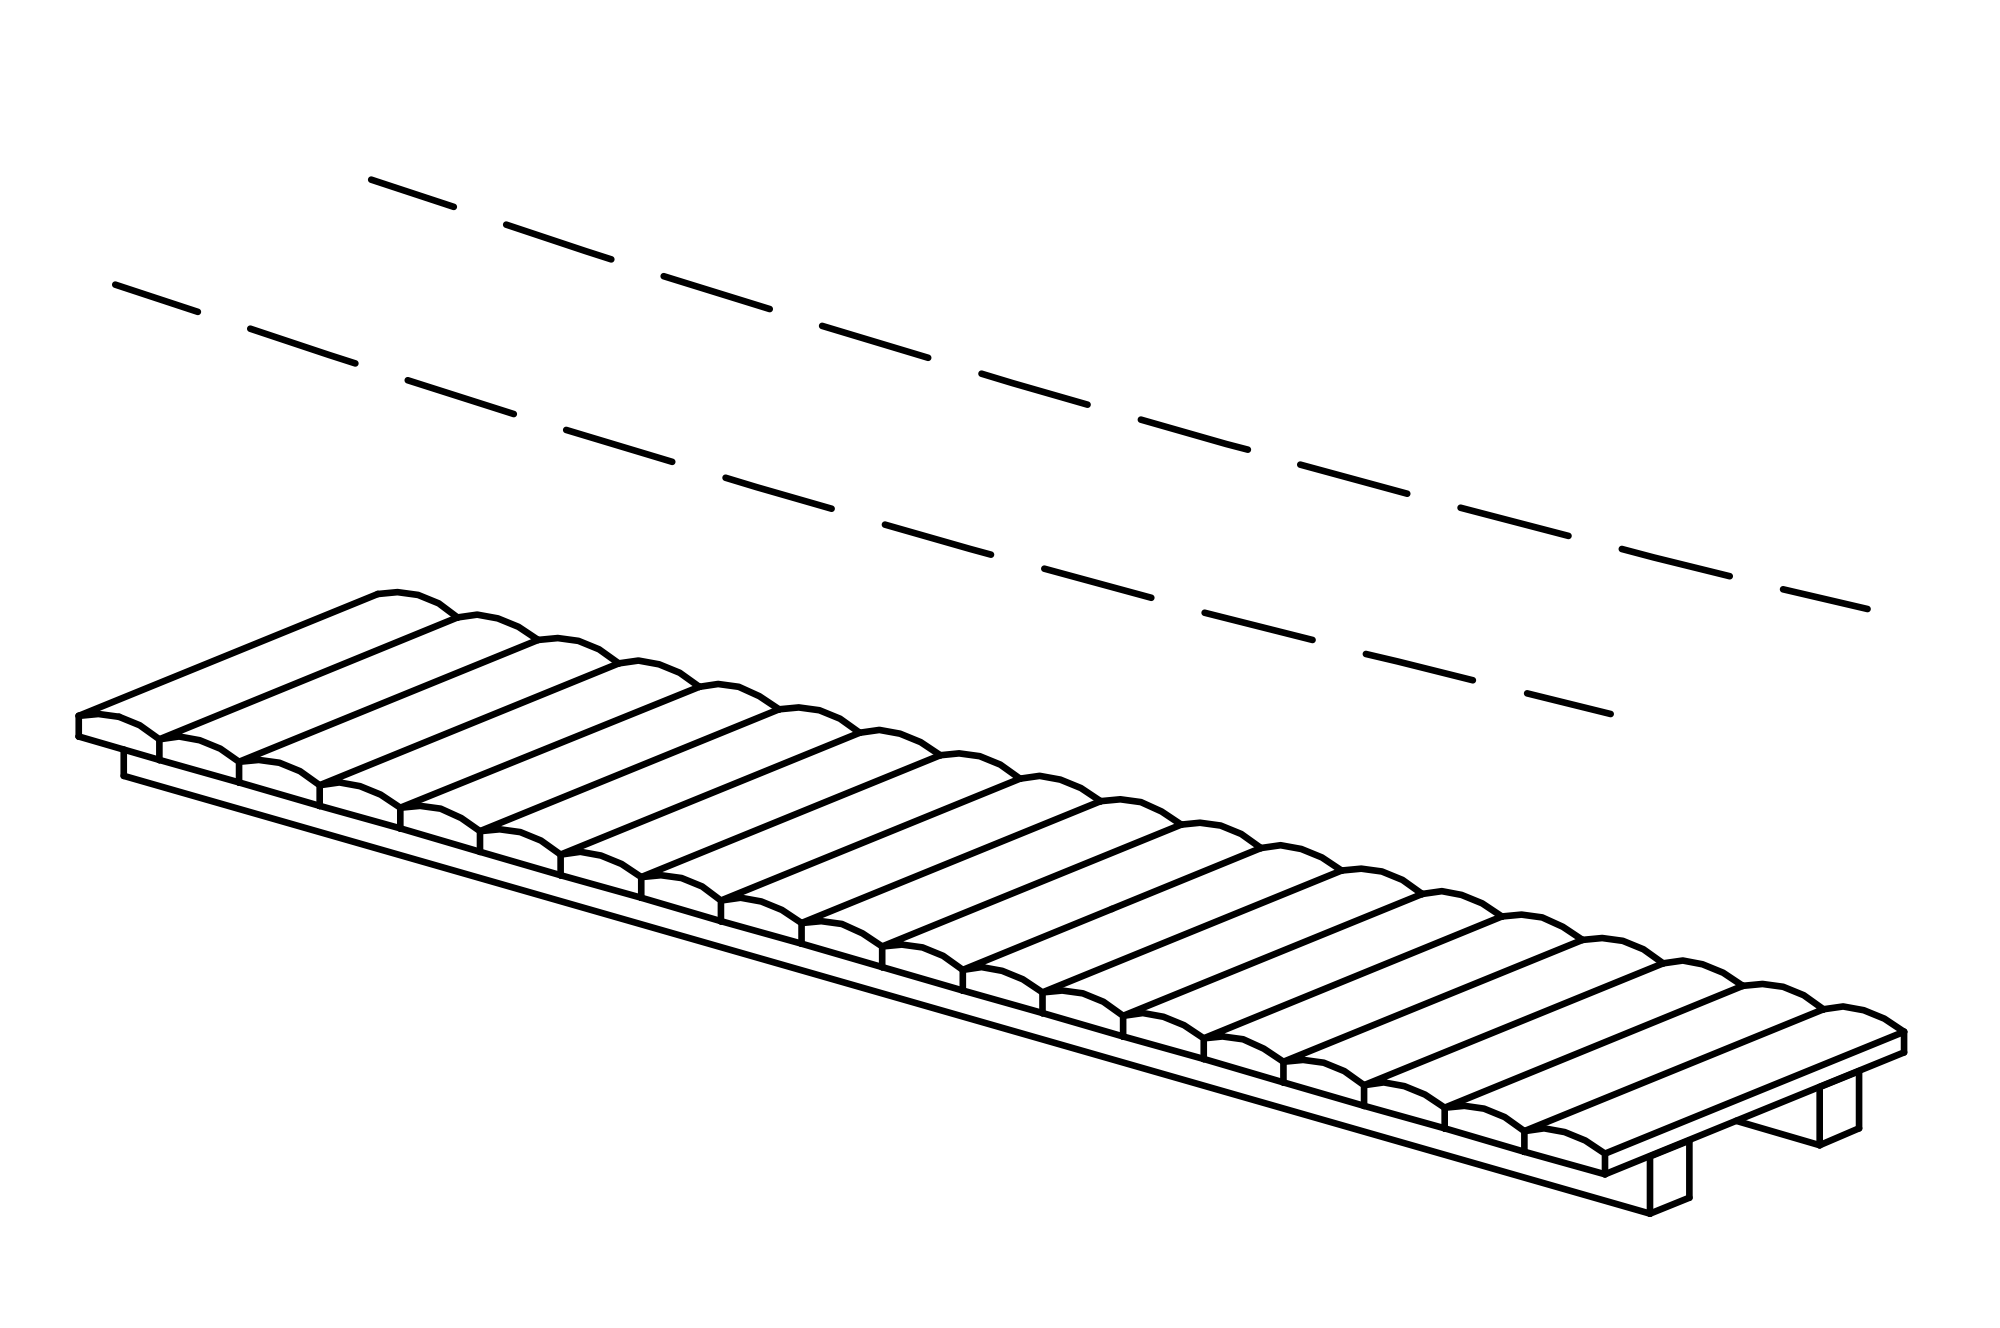 Bridge with chain handrail, length = 5 m